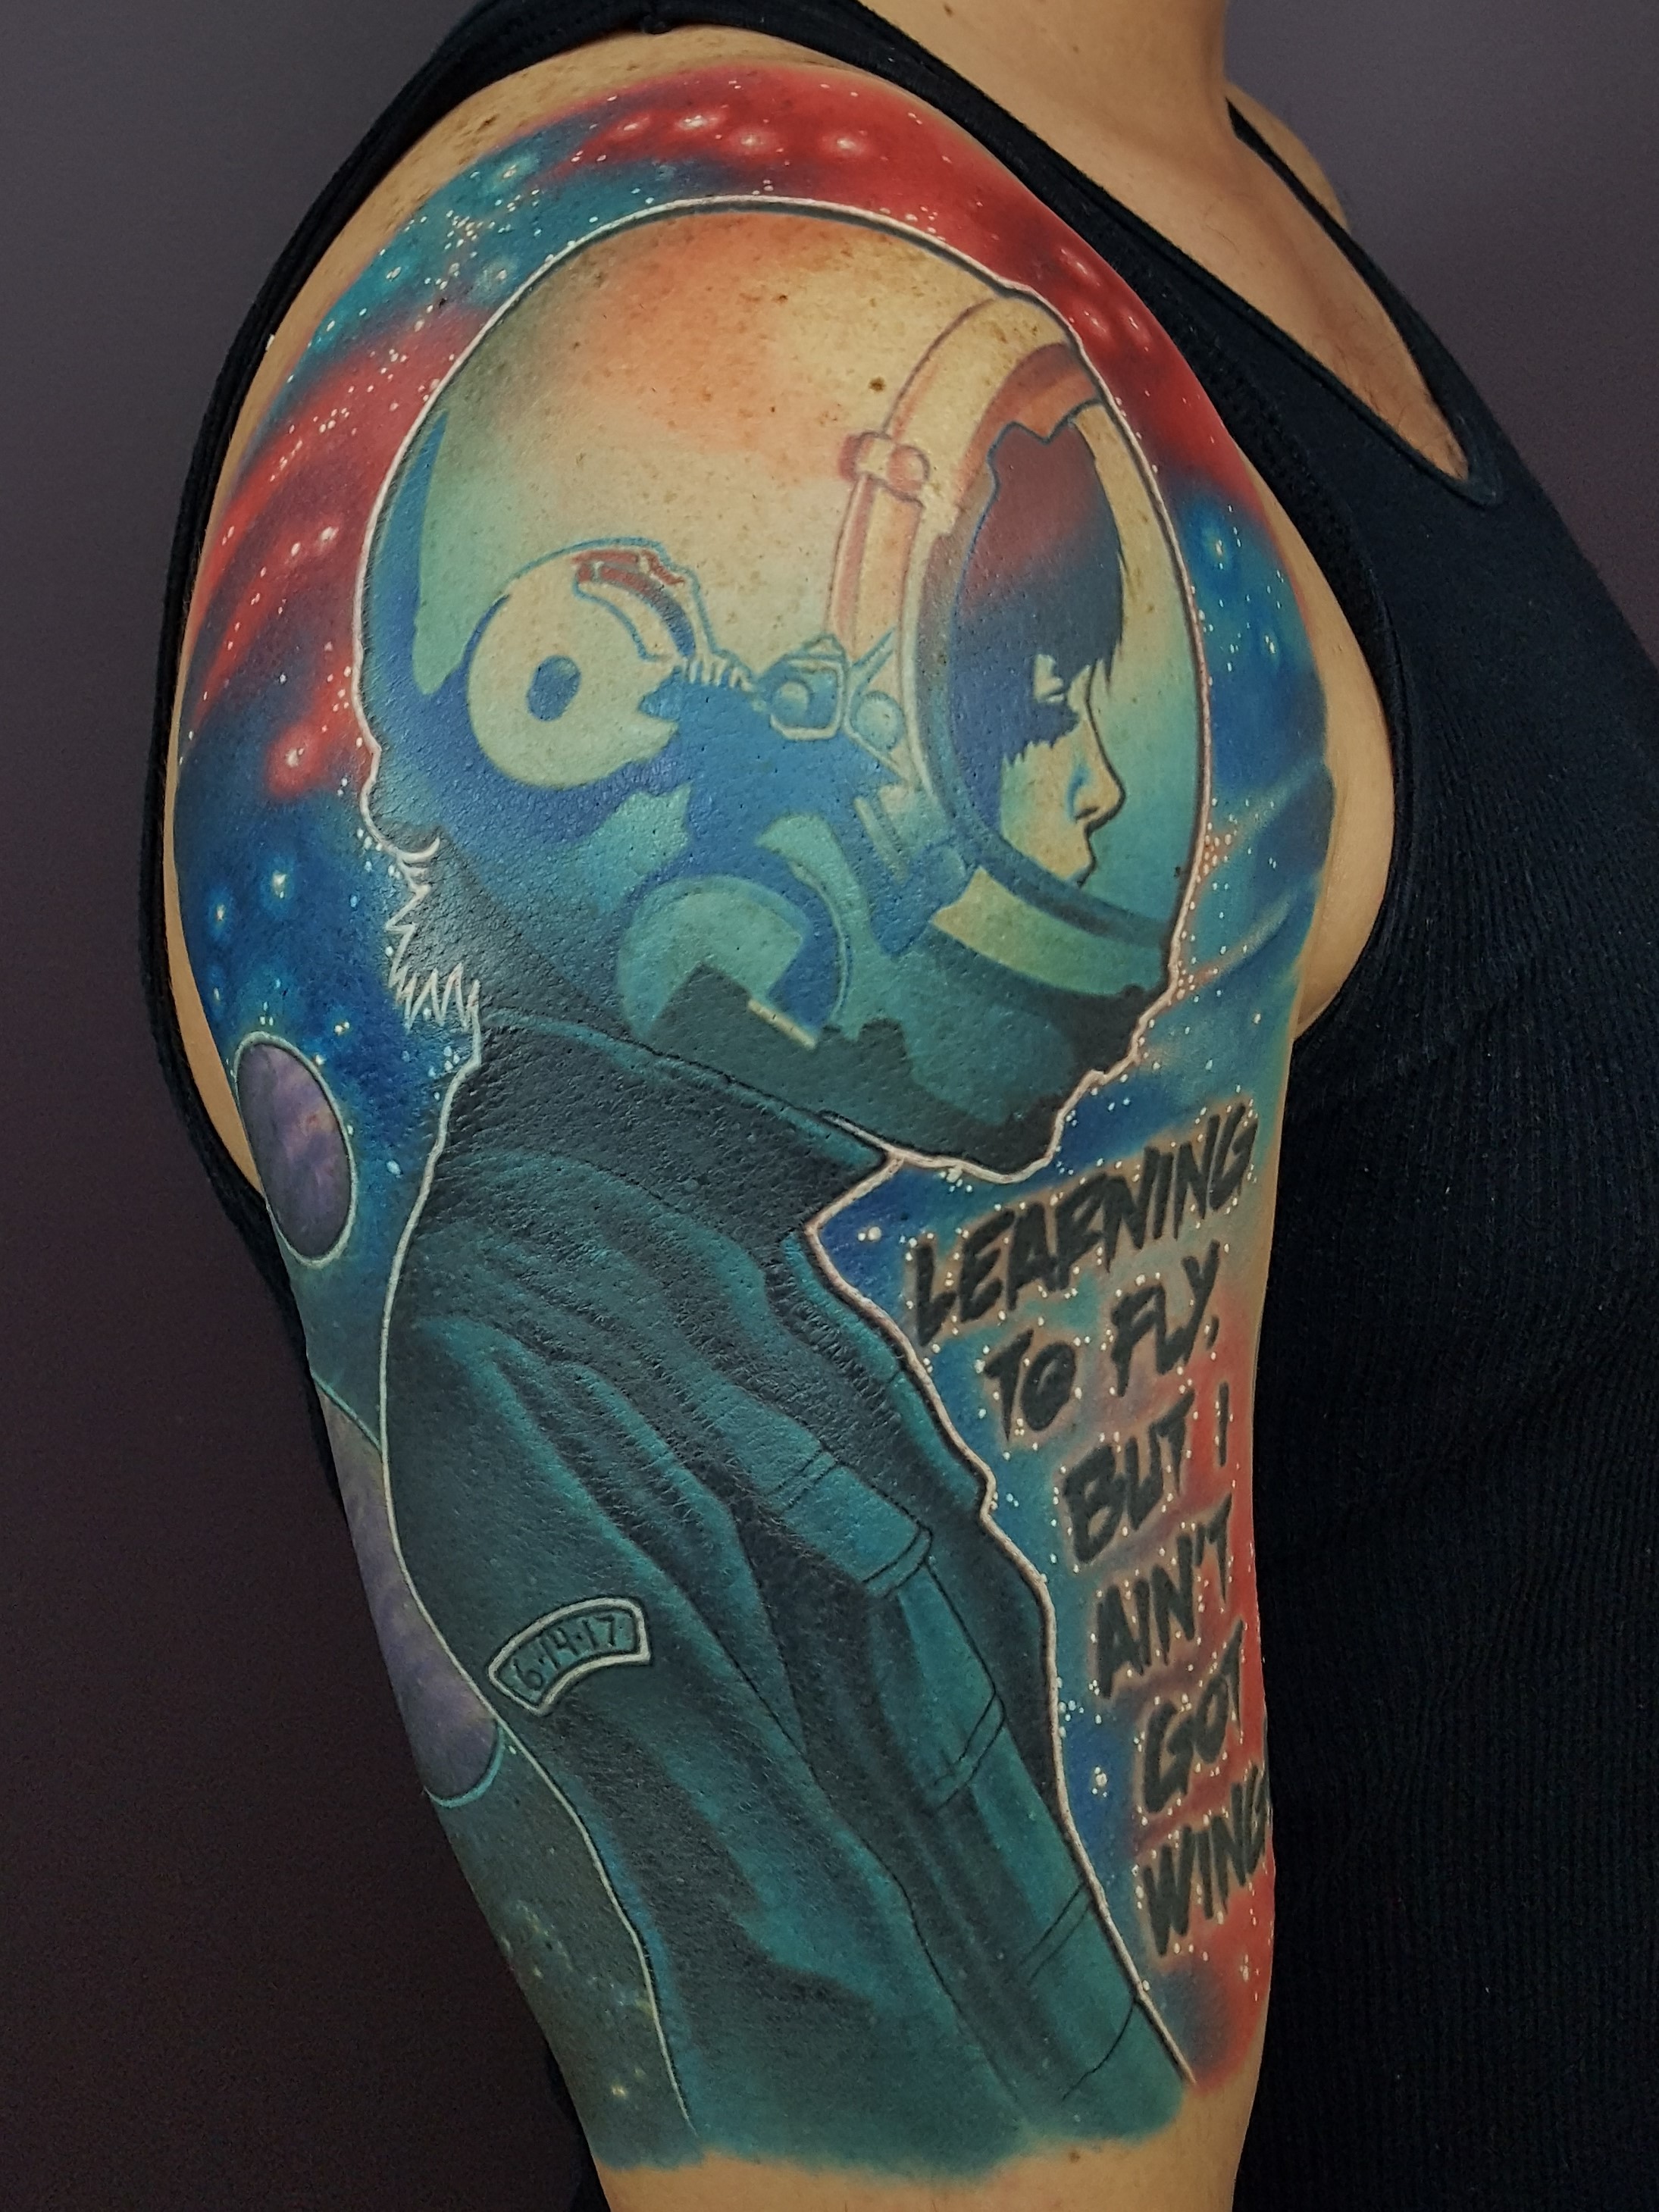 Space girl Tom Petty tattoo by CT artist Cracker Joe Swider